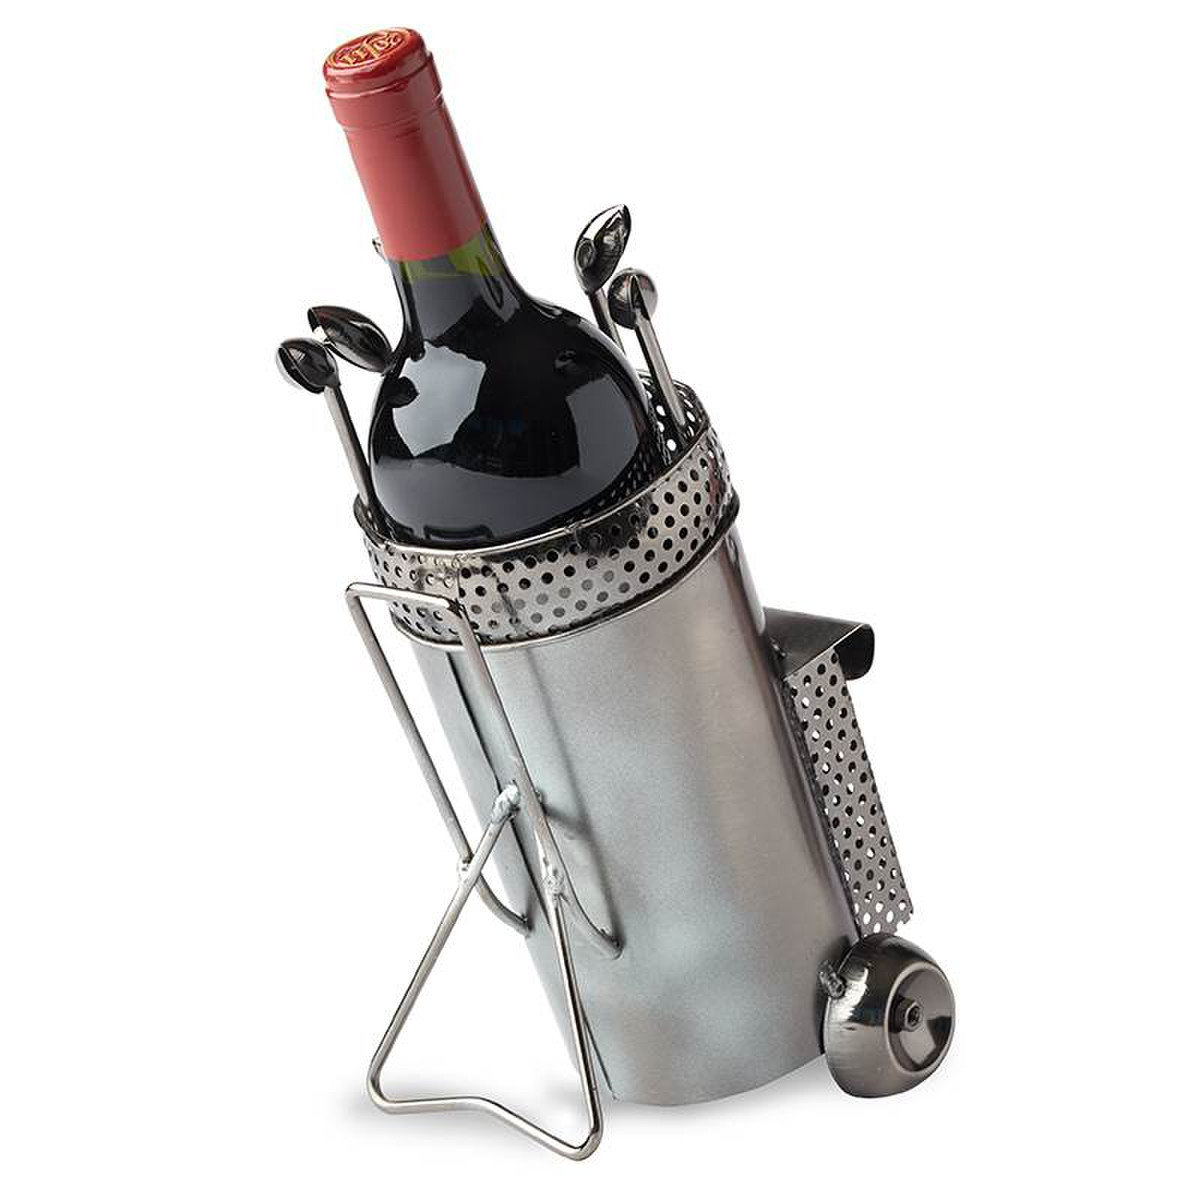 IWA Golf Bag Wine Bottle Holder